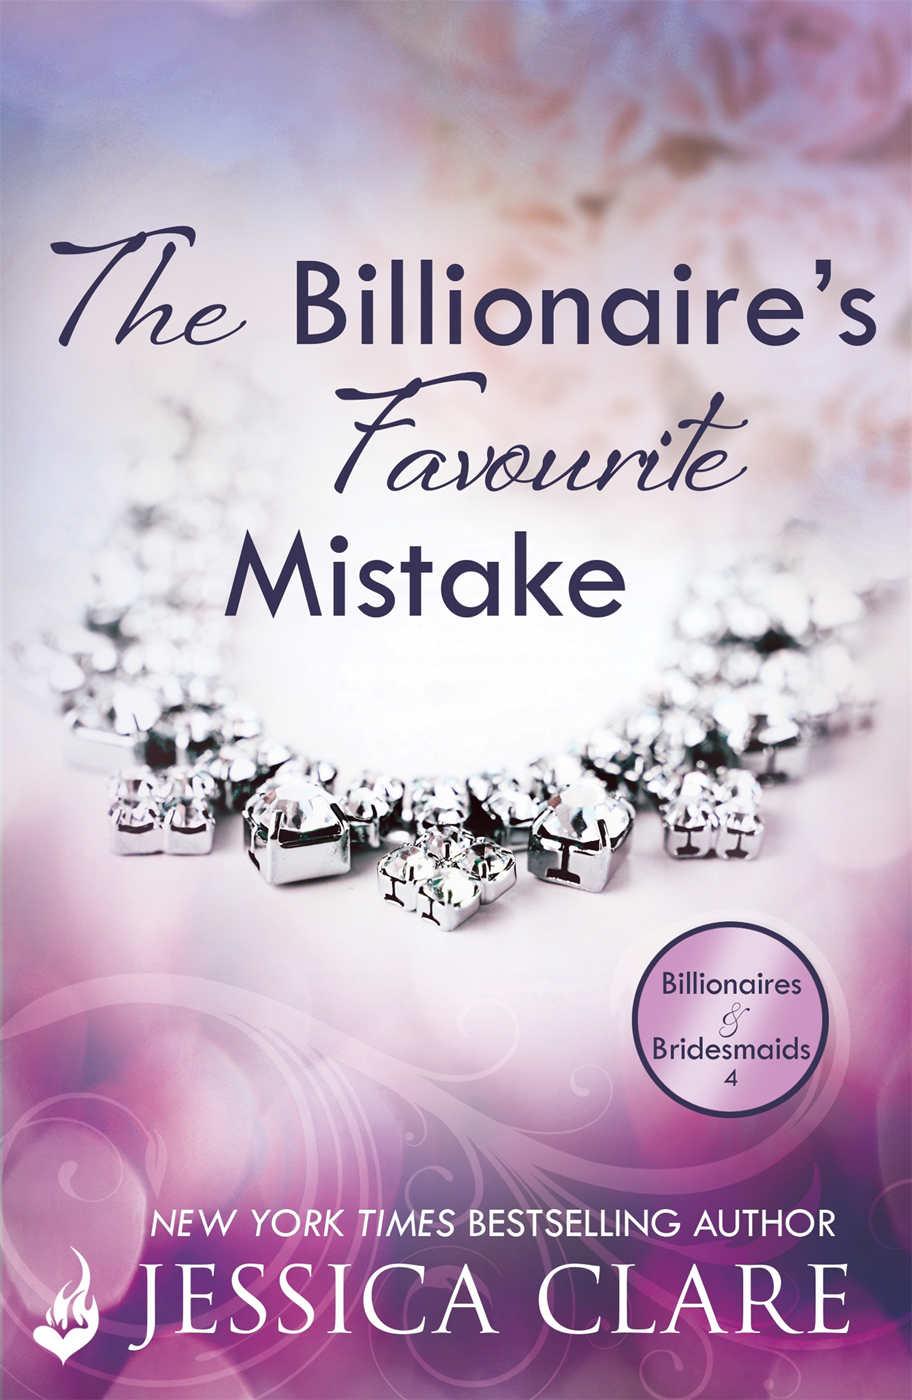 The Billionaire's Favourite Mistake: Billionaires and Bridesmaids 4